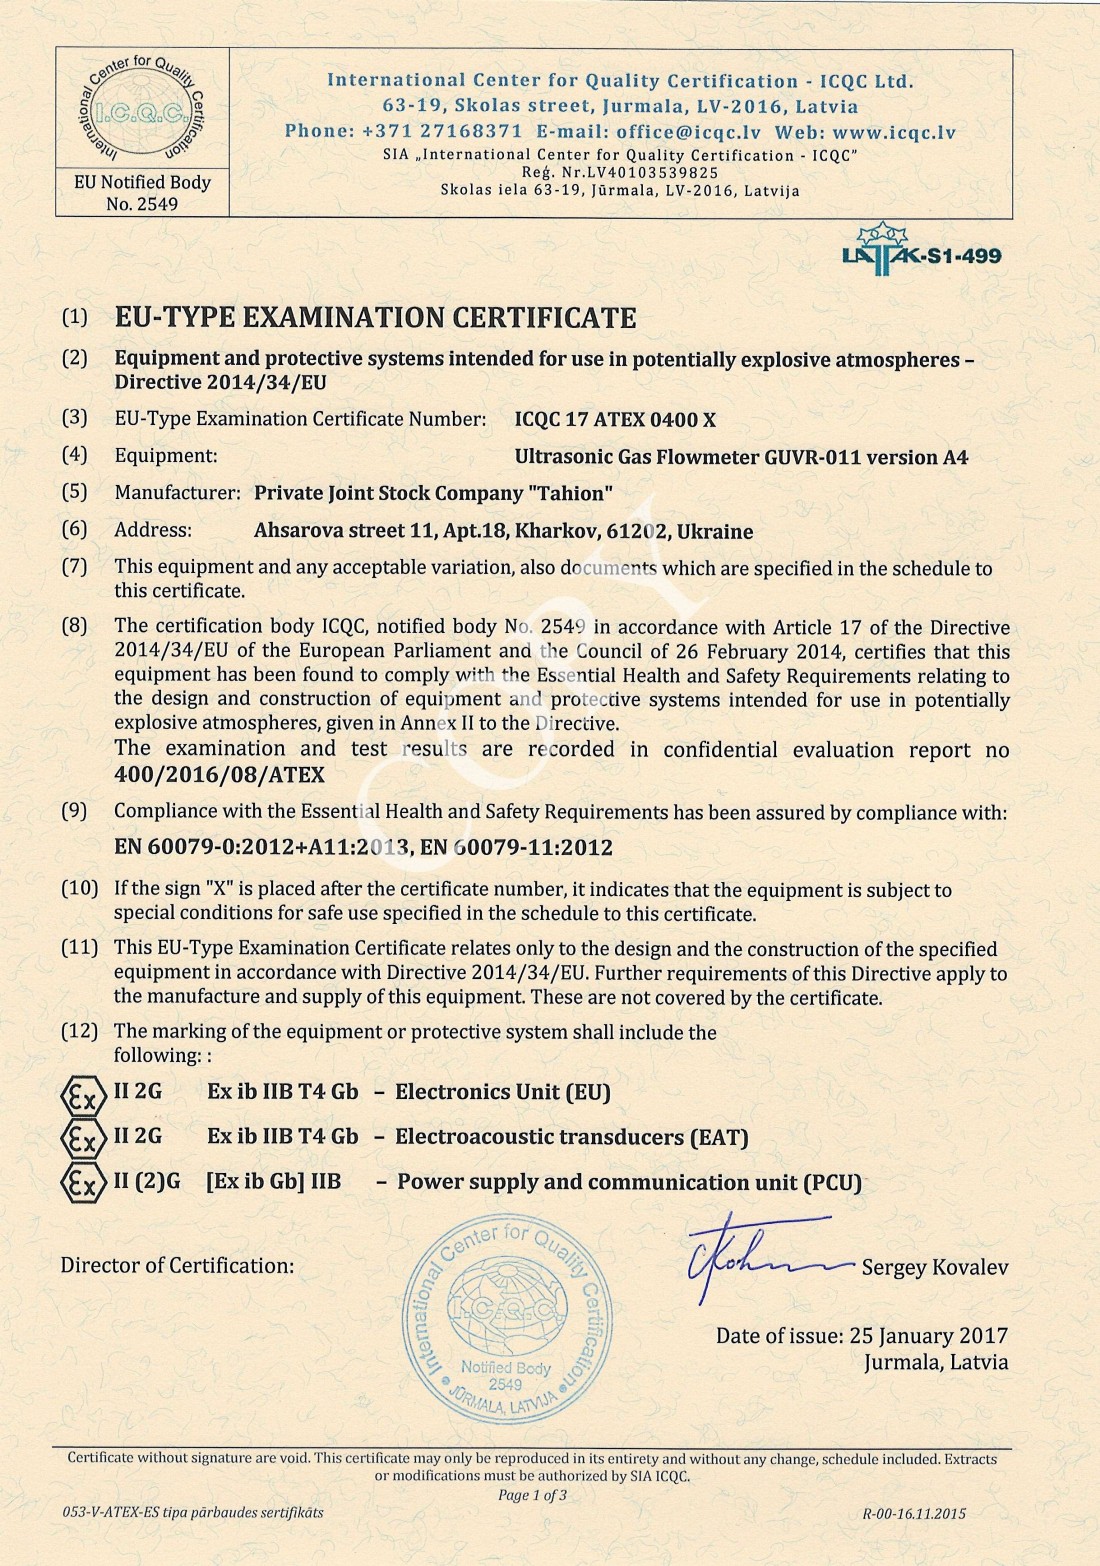 Ex Type Examination Certificate ATEX сертификат типа